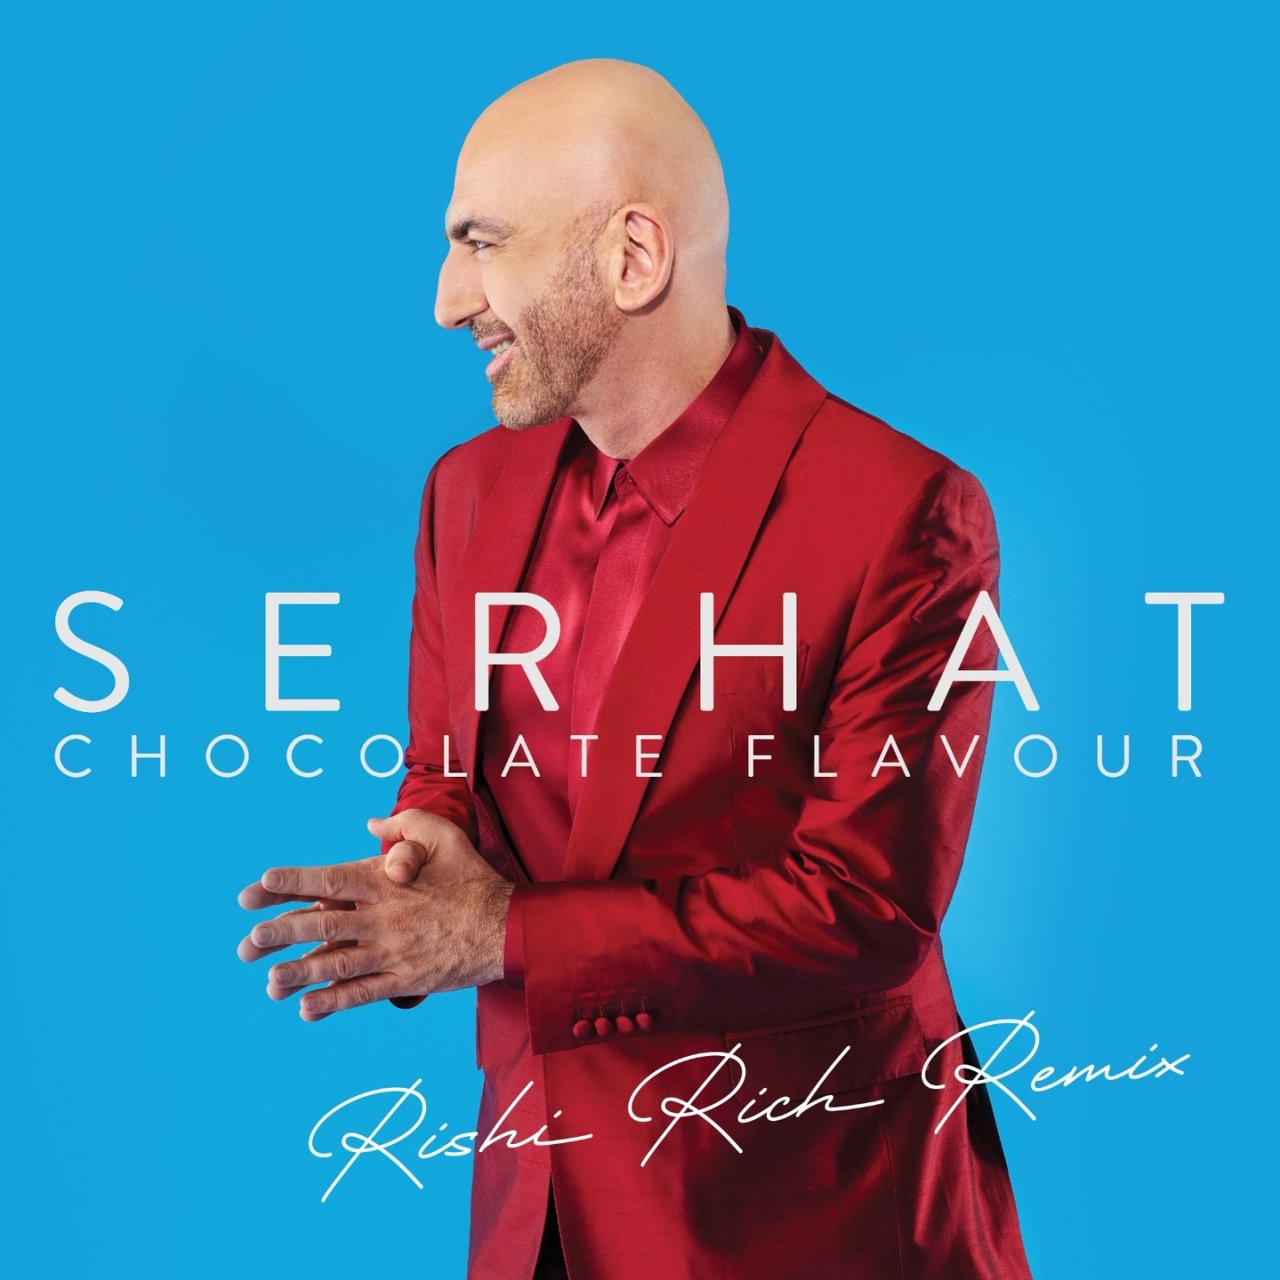 Serhat — Chocolate Flavour (Rishi Rich Remix) cover artwork